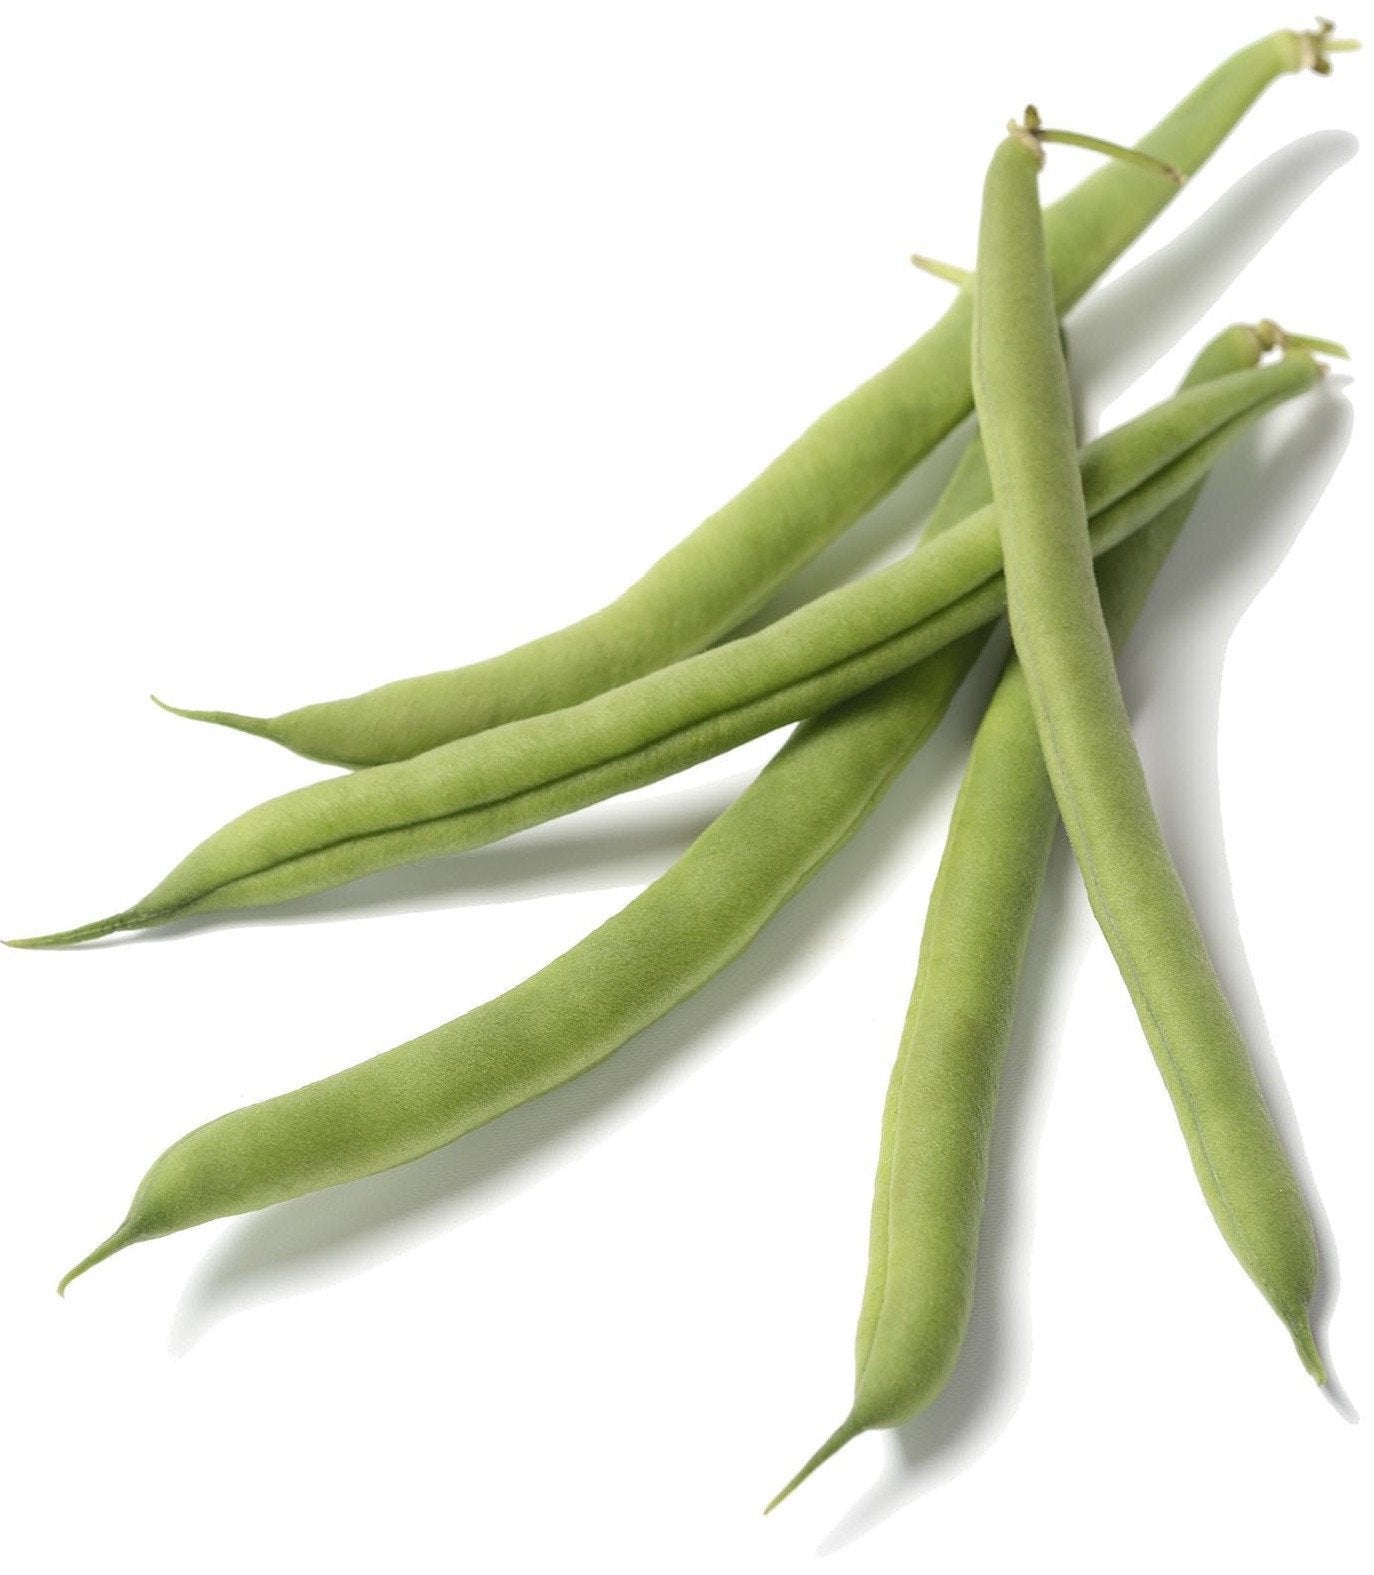 Best Organic, Non-GMO Kentucky Wonder Pole Bean Seeds - Buy Online: The ...